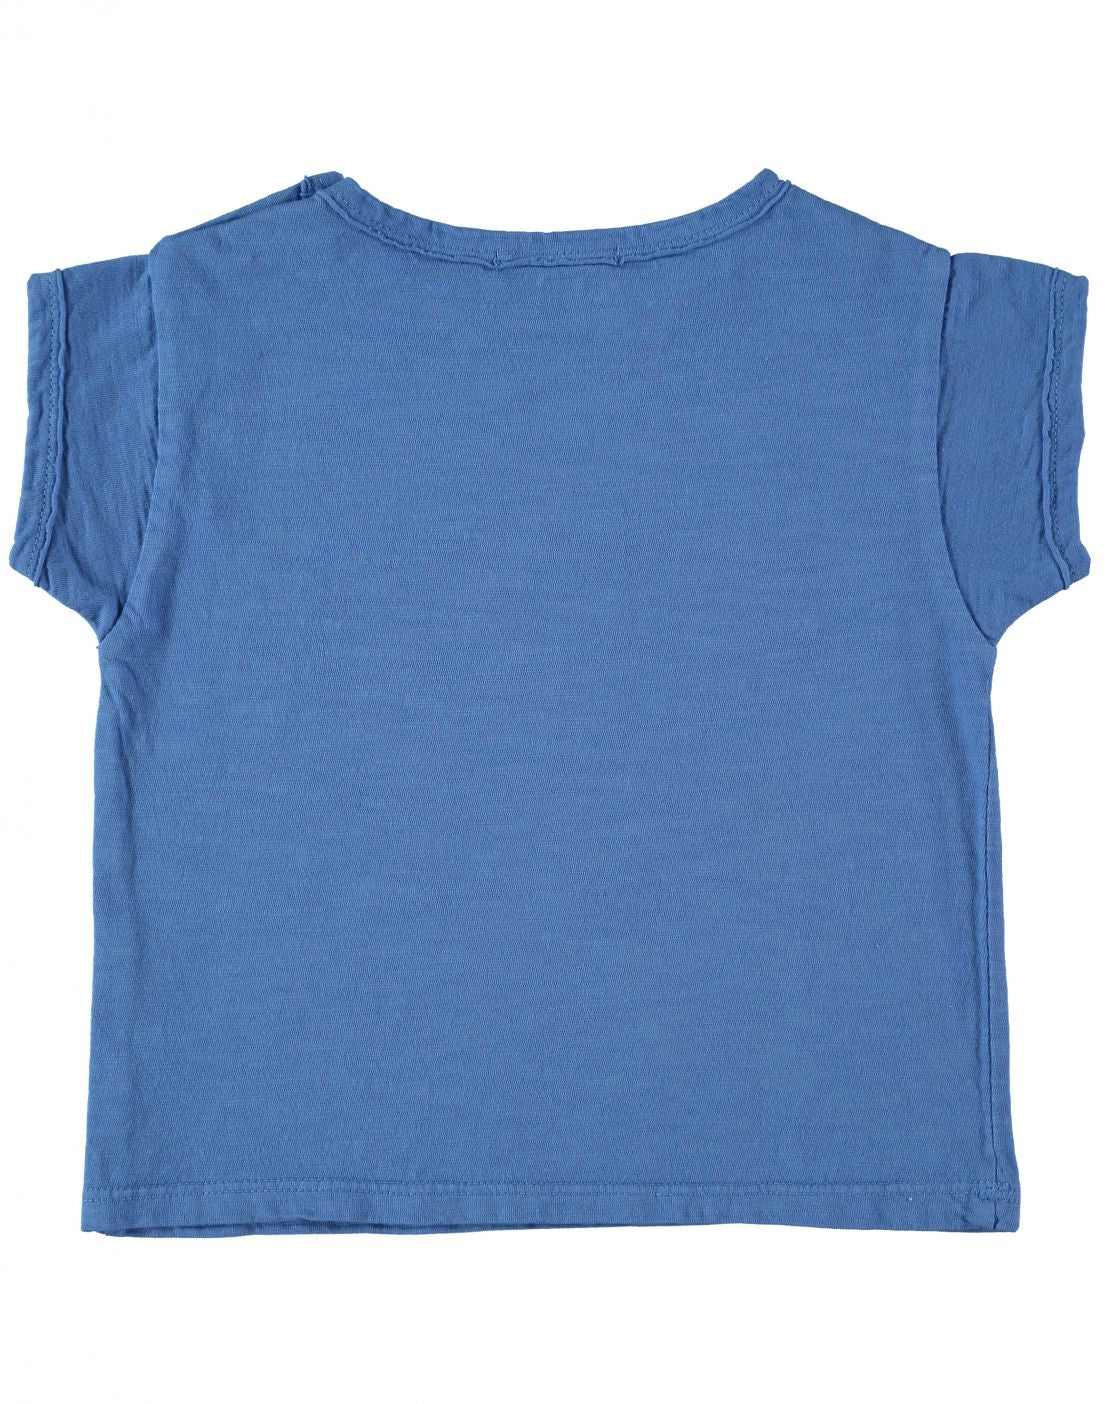 Babyclic T-shirt electric blue